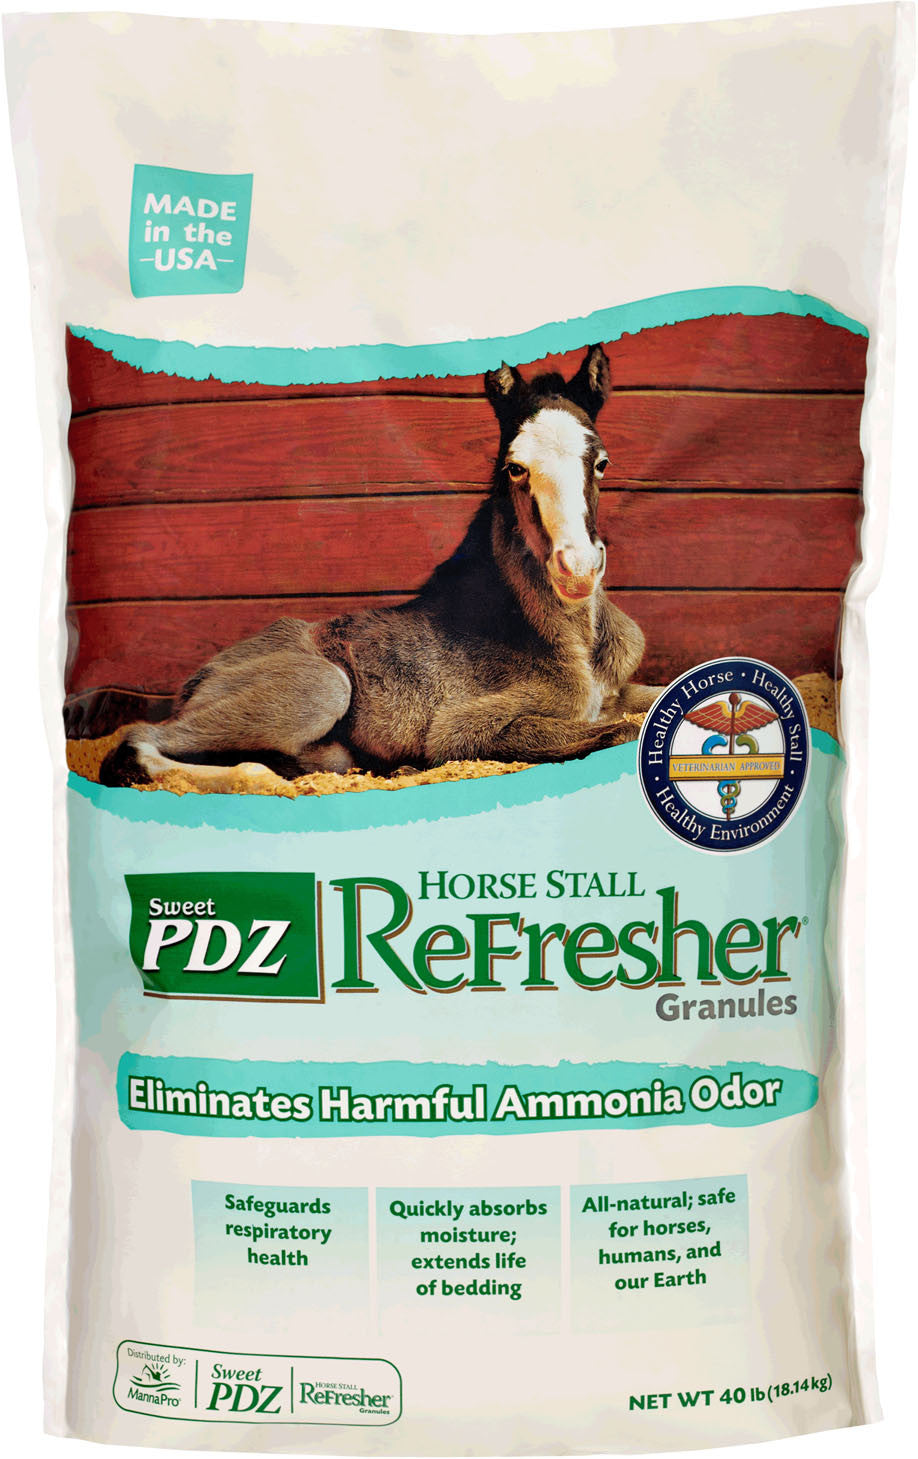 Sweet Pdz Horse Stall Refresher Granules